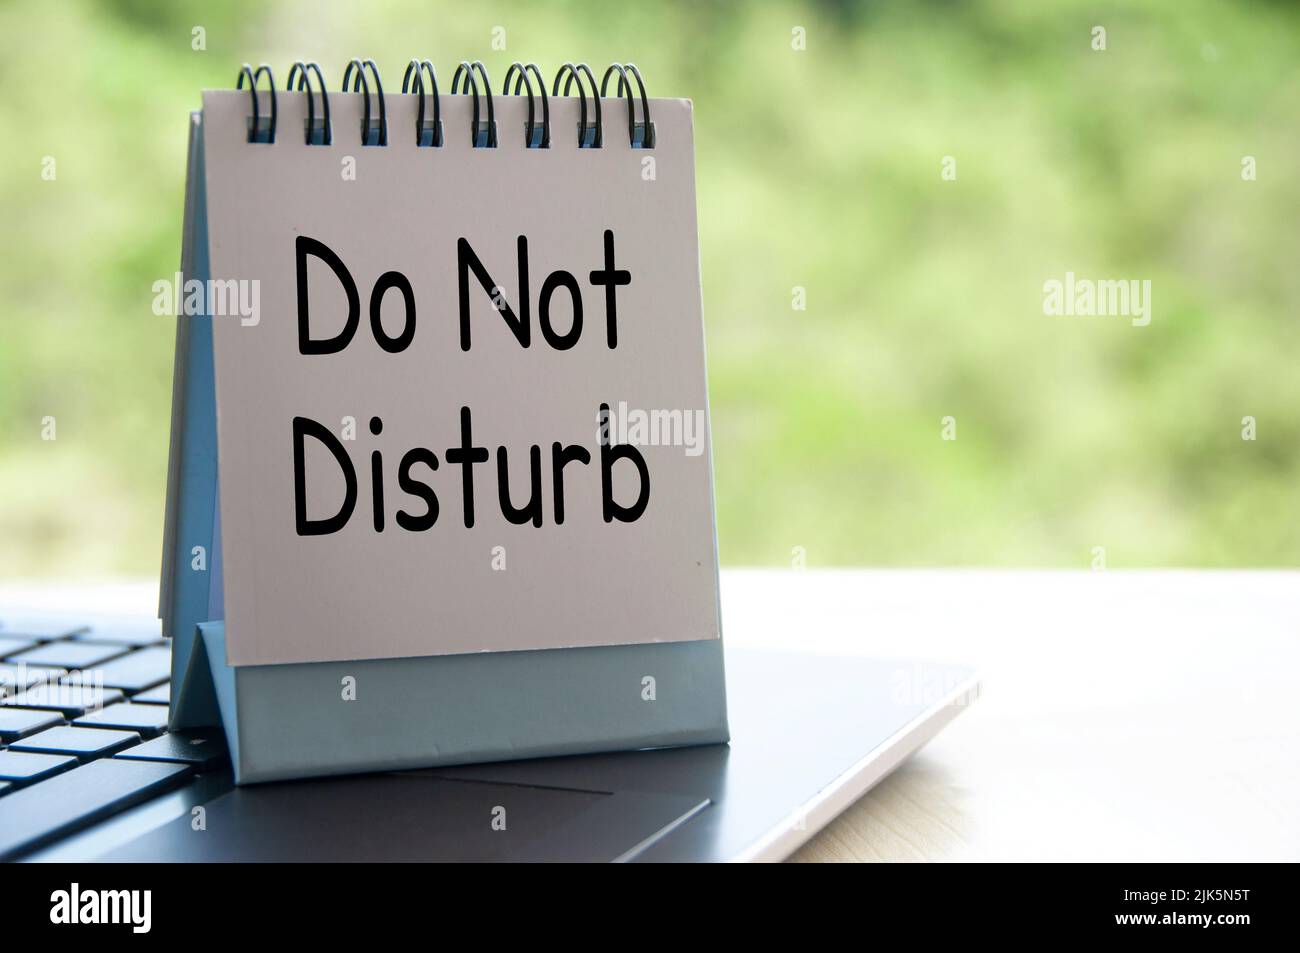 Do not disturb text on white table calendar on laptop keyboard. Stock Photo